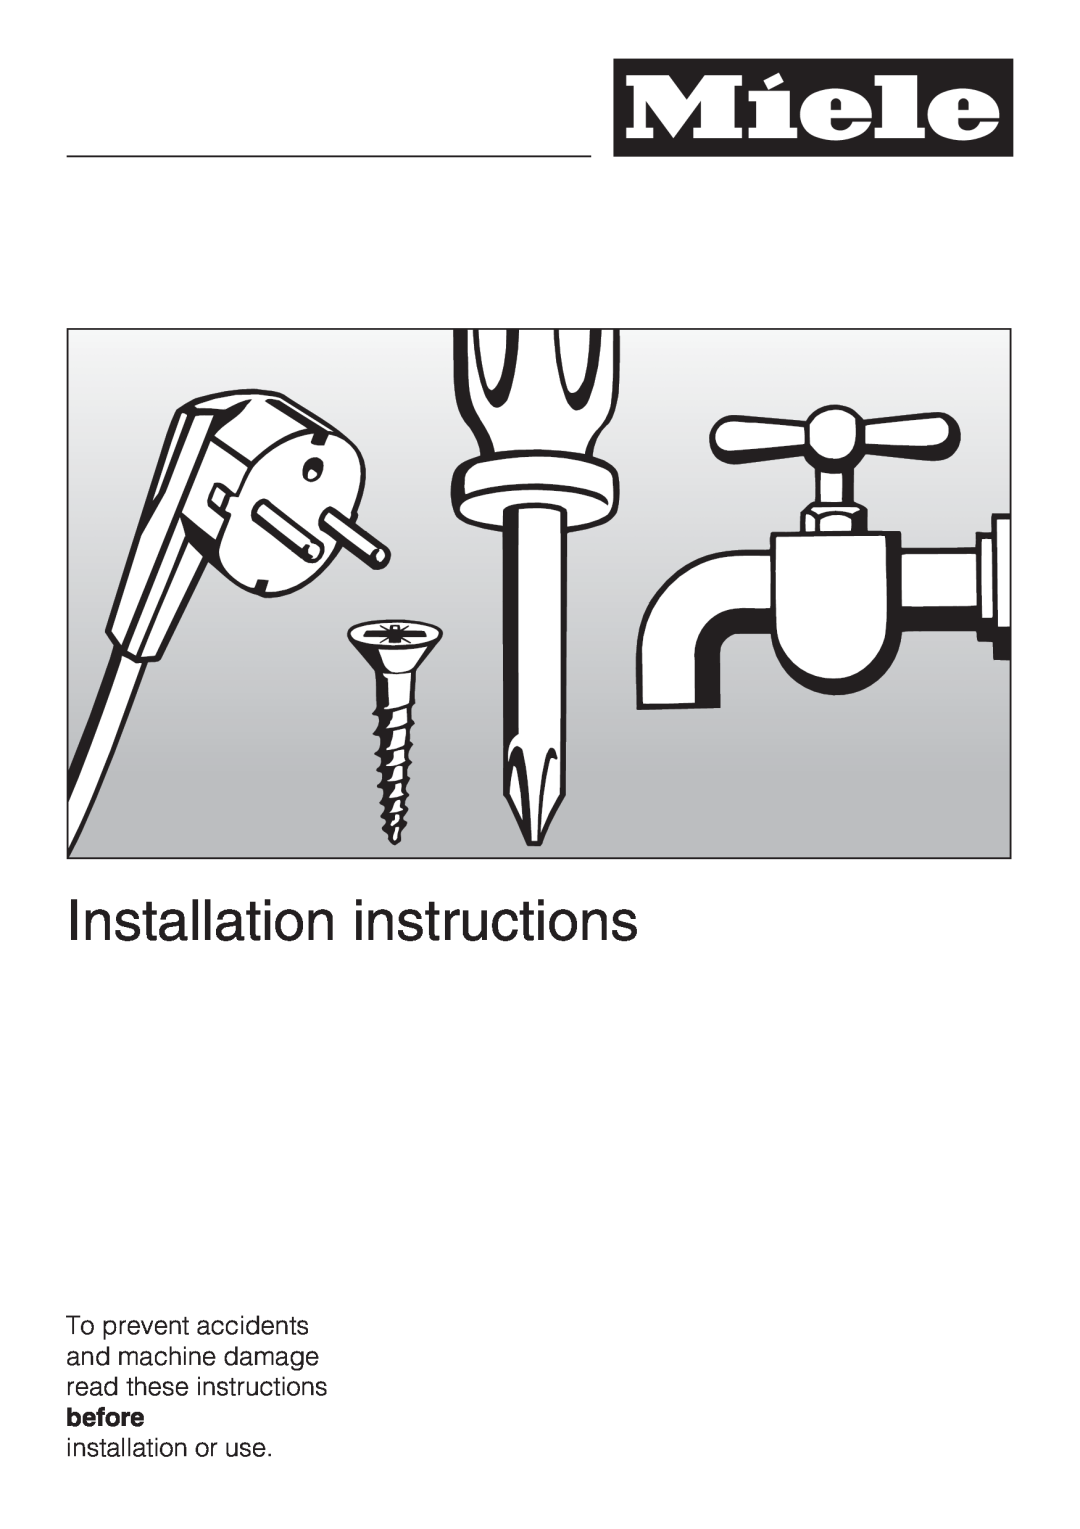 Miele KF1901SF, KF1811SF, KF1801SF, KF1911SF installation instructions Installation instructions, installation or use 